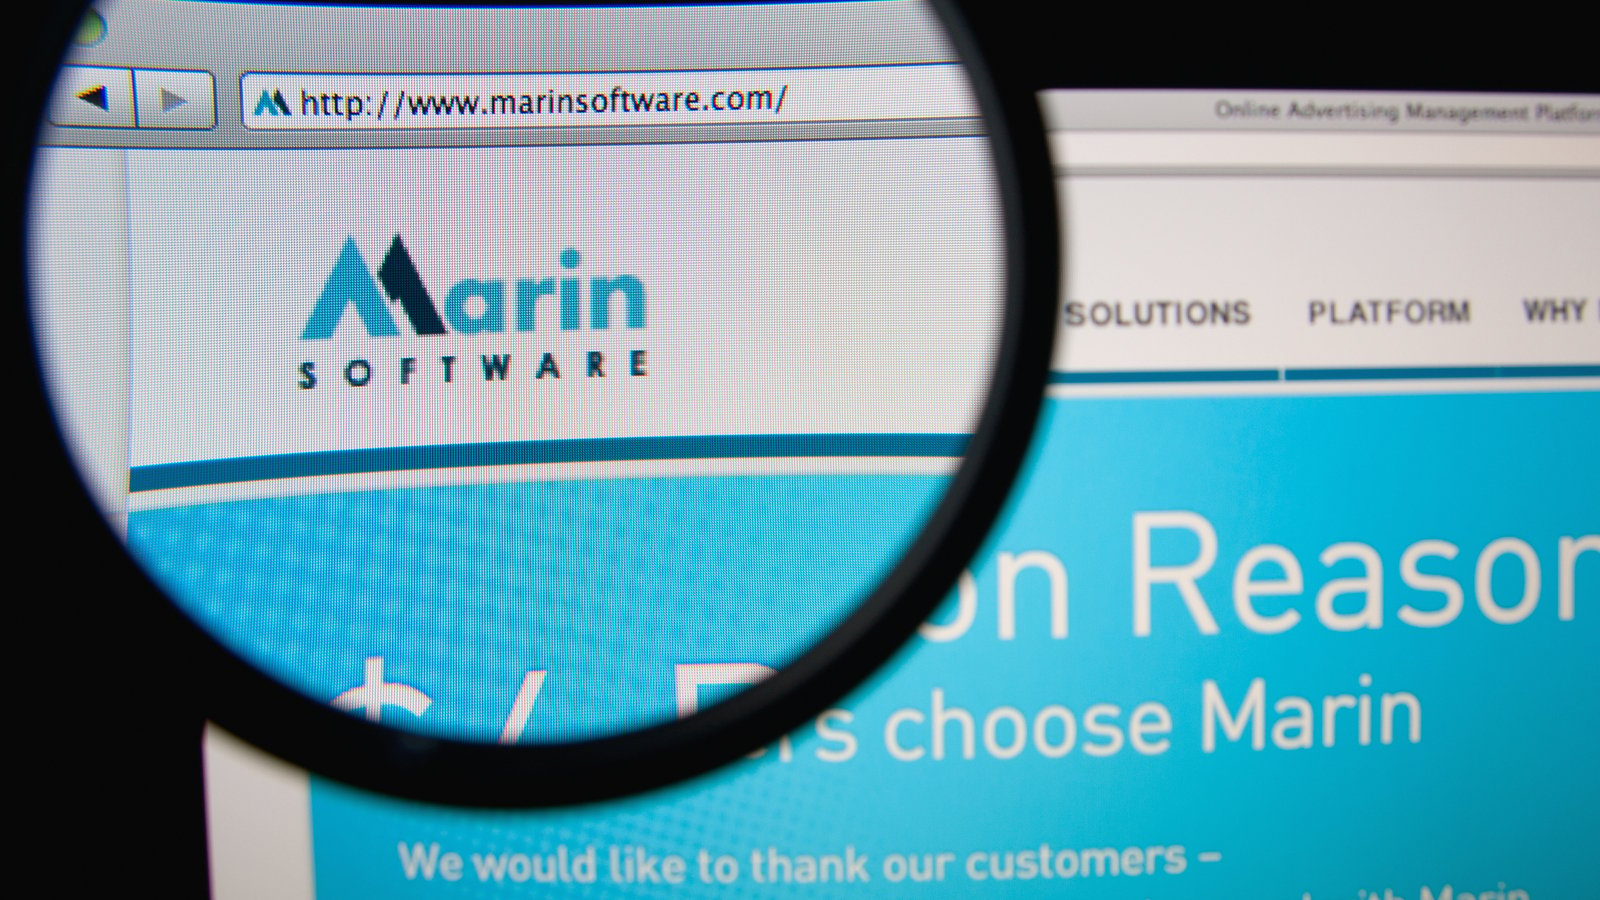 Marin Software (MRIN Stock) website under magnifying glass.